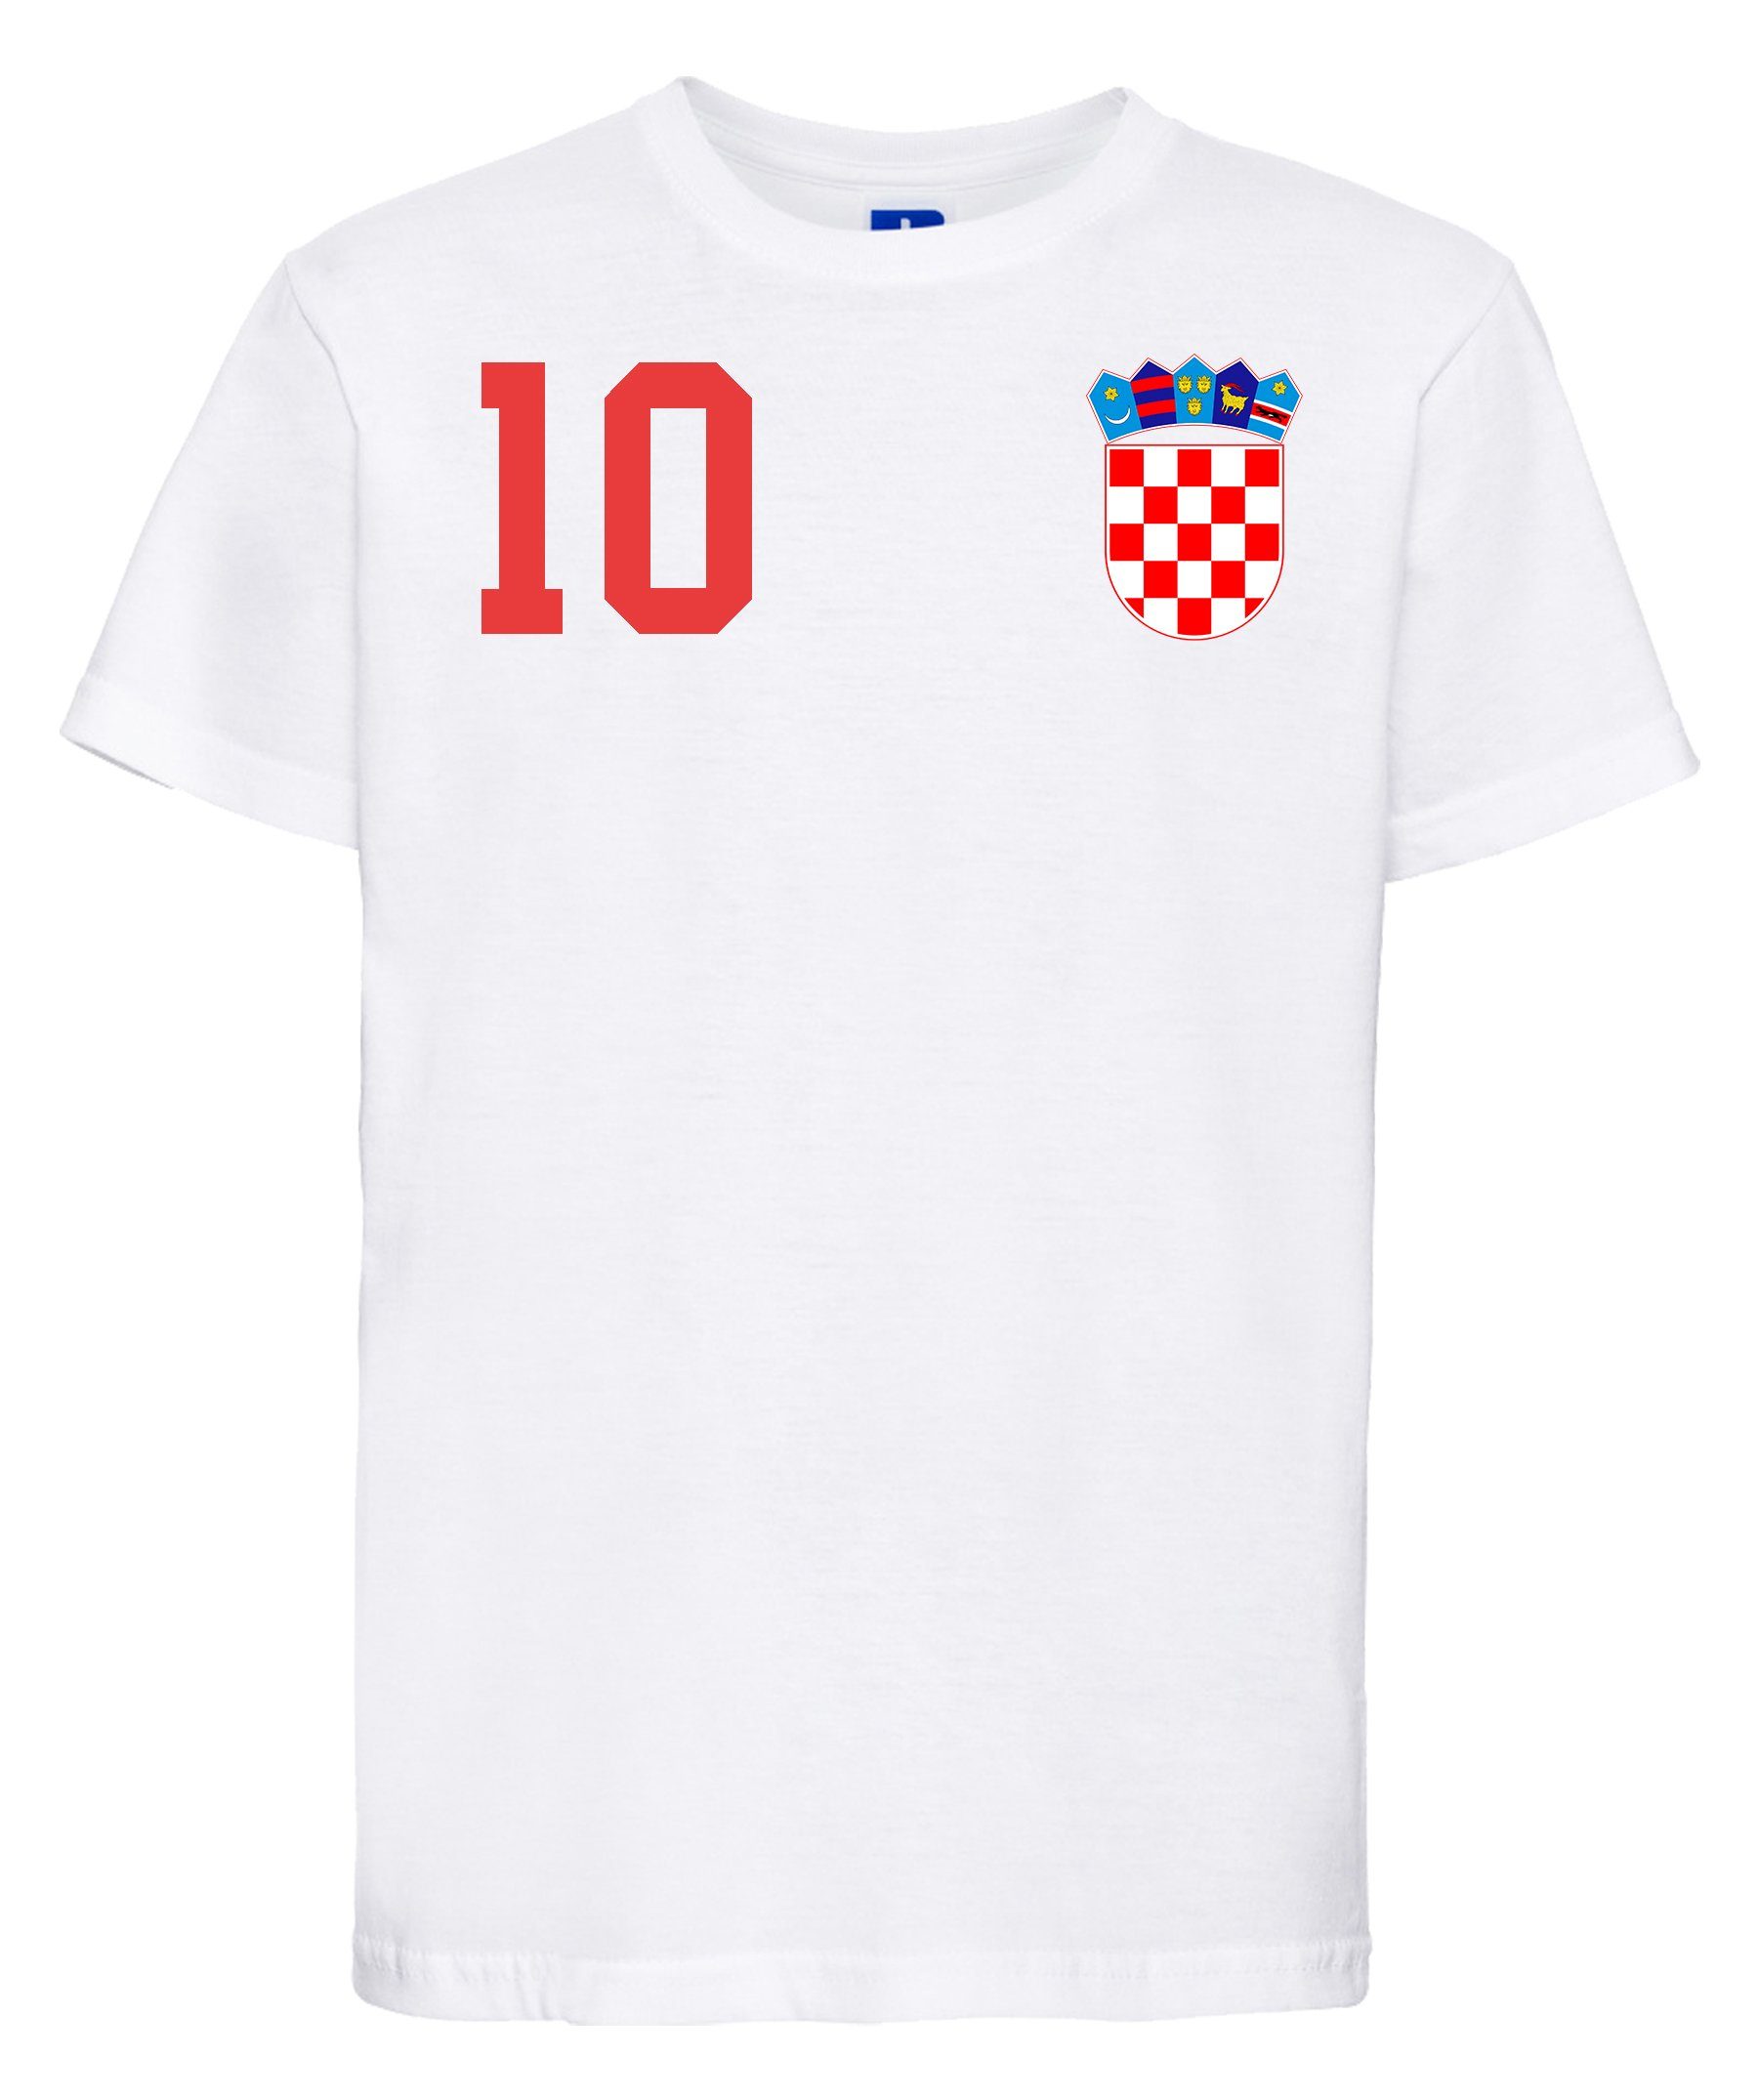 Niederlande EM 2020 Fanshirt Männer Fanartikel Fußball Fan Herren T-Shirt Trikot 